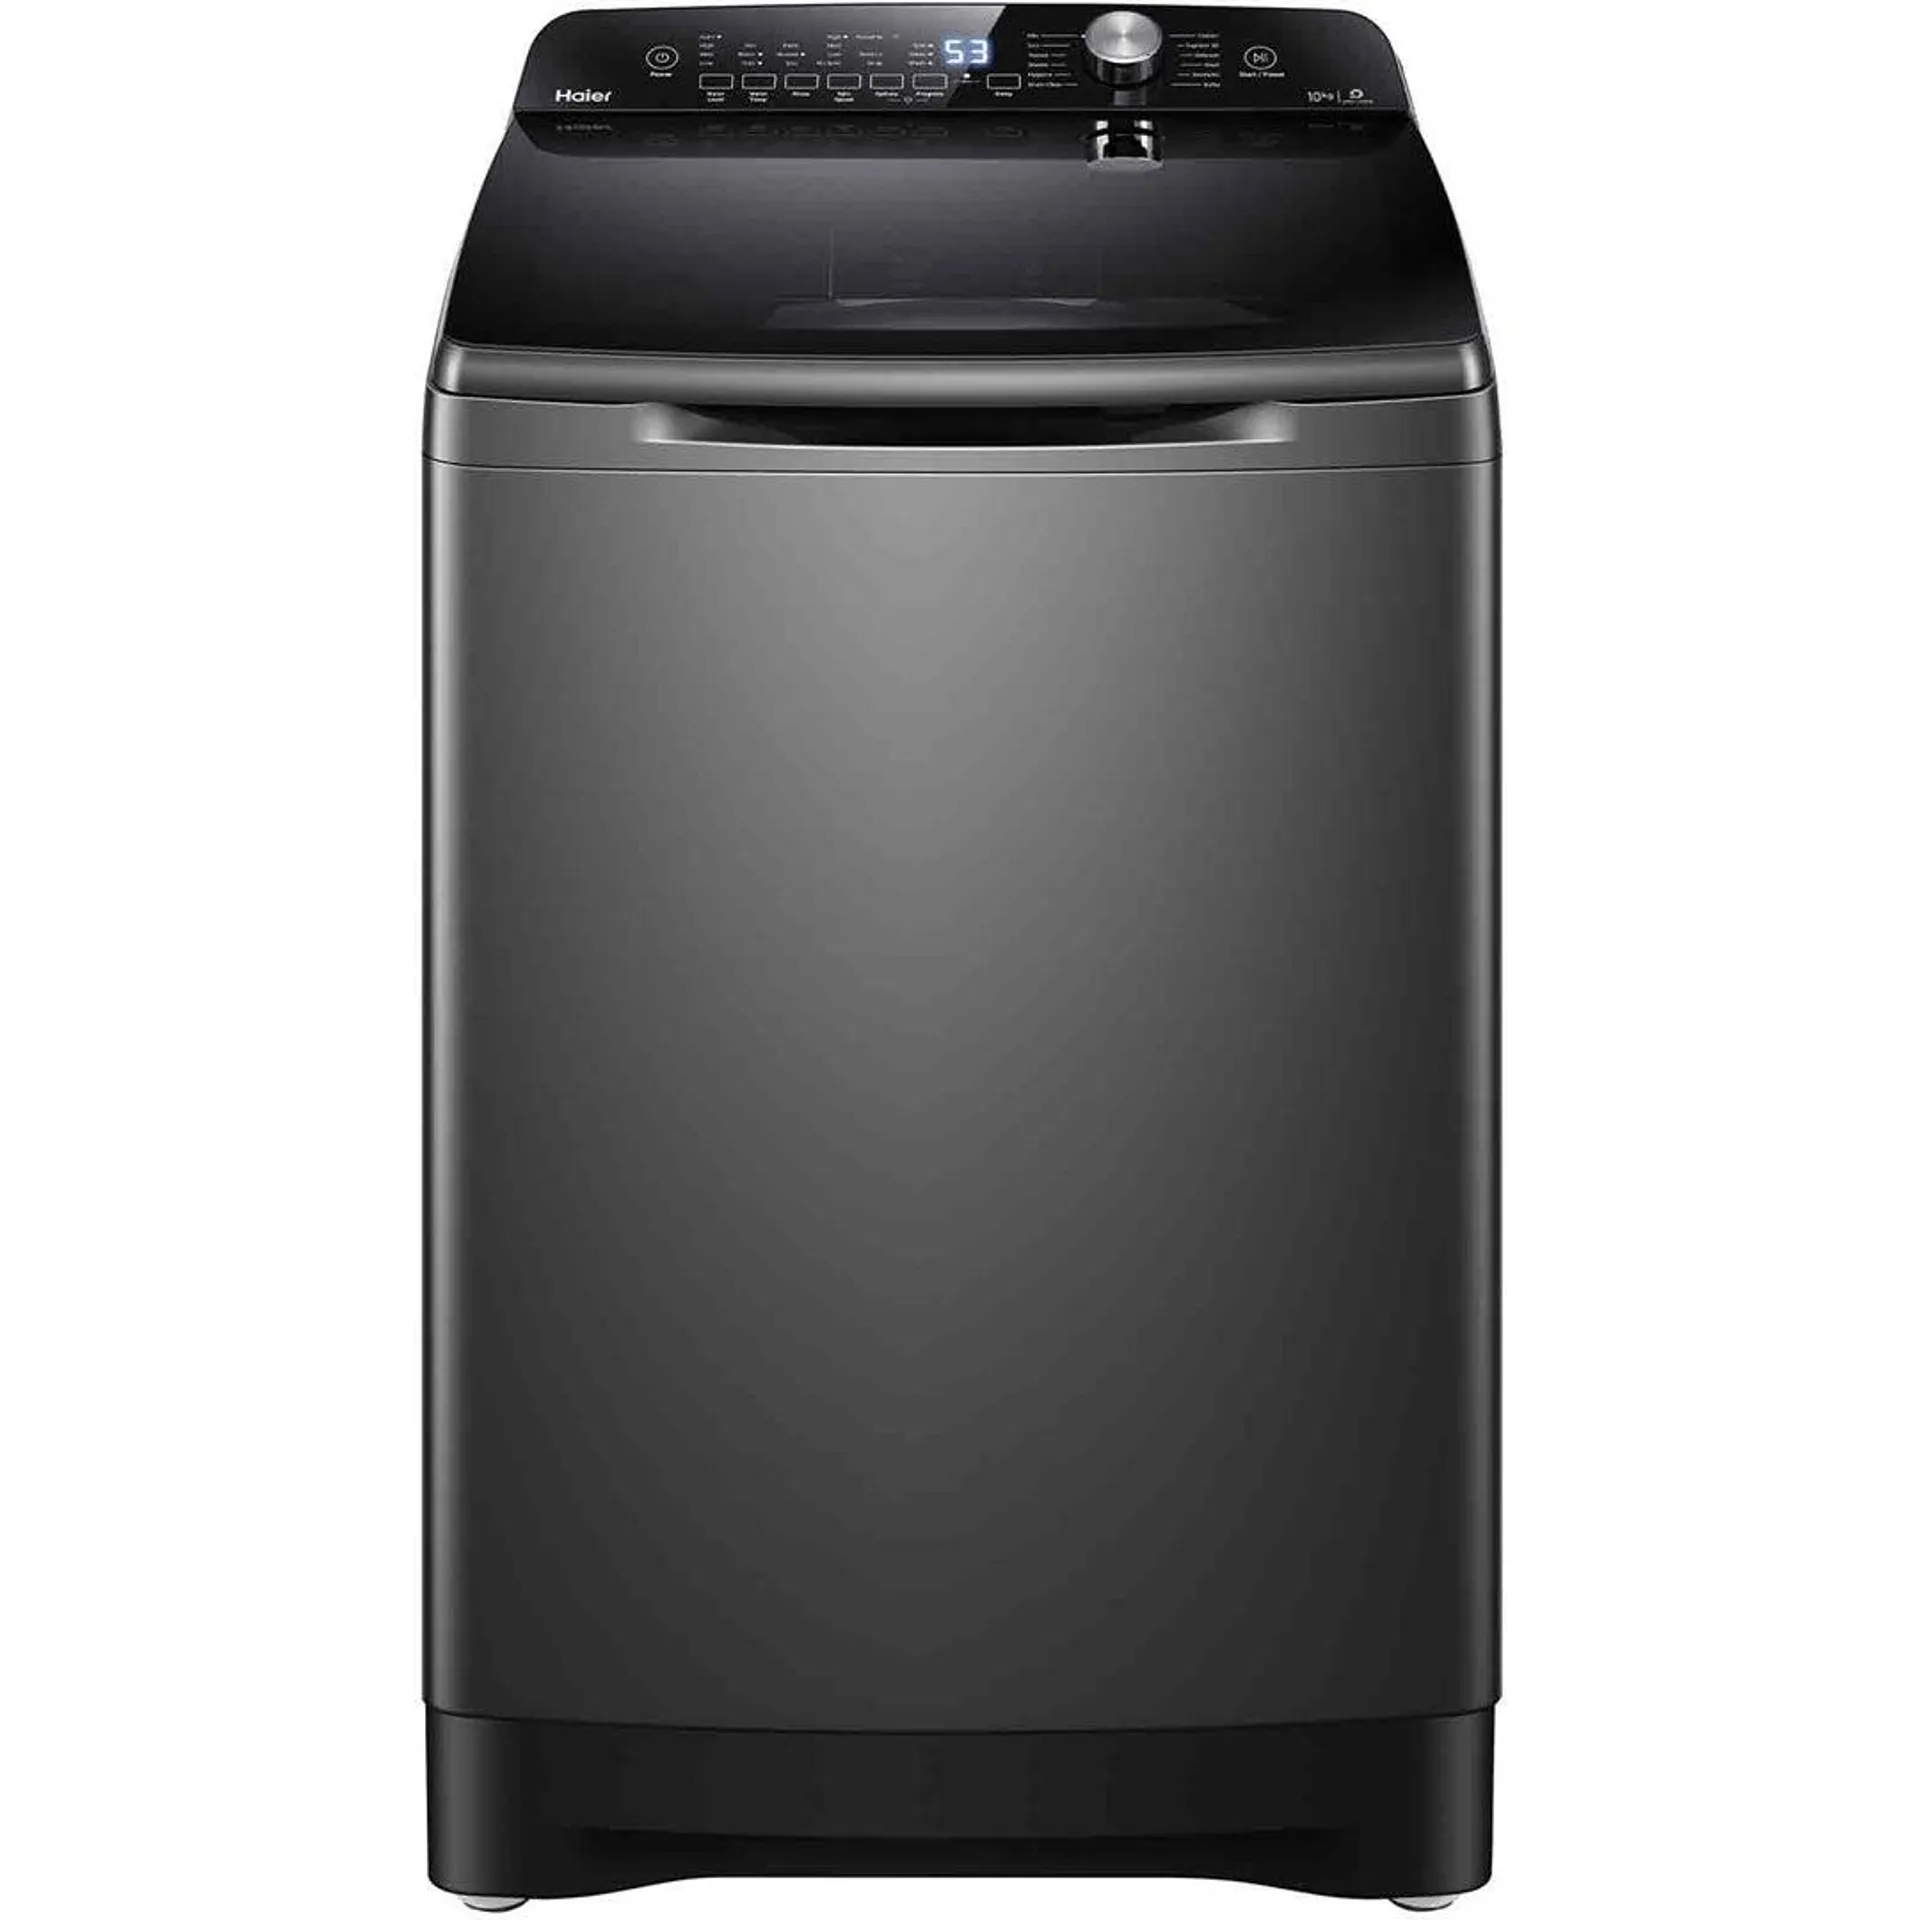 Haier 10kg Top Load Washing Machine in Black